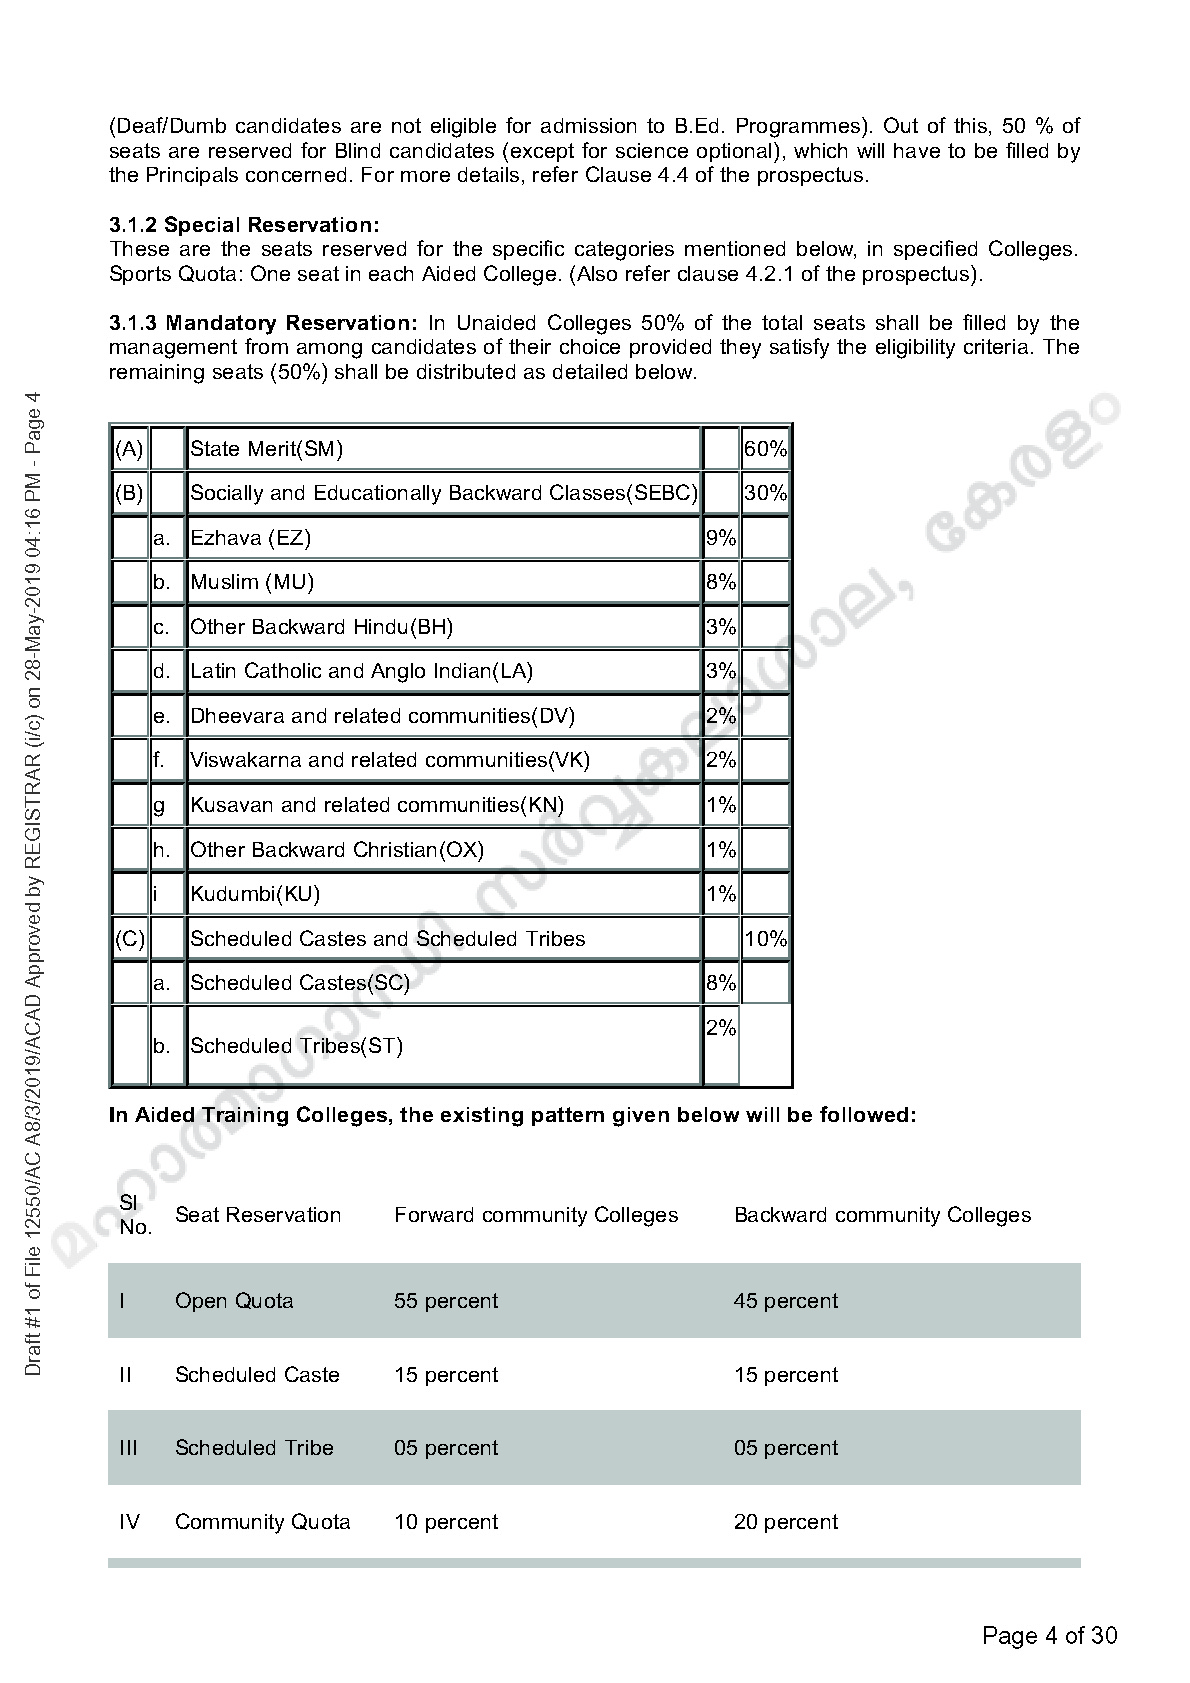 MG University B Ed Prospectus and Application form 2019 2020 - Notification Image 4